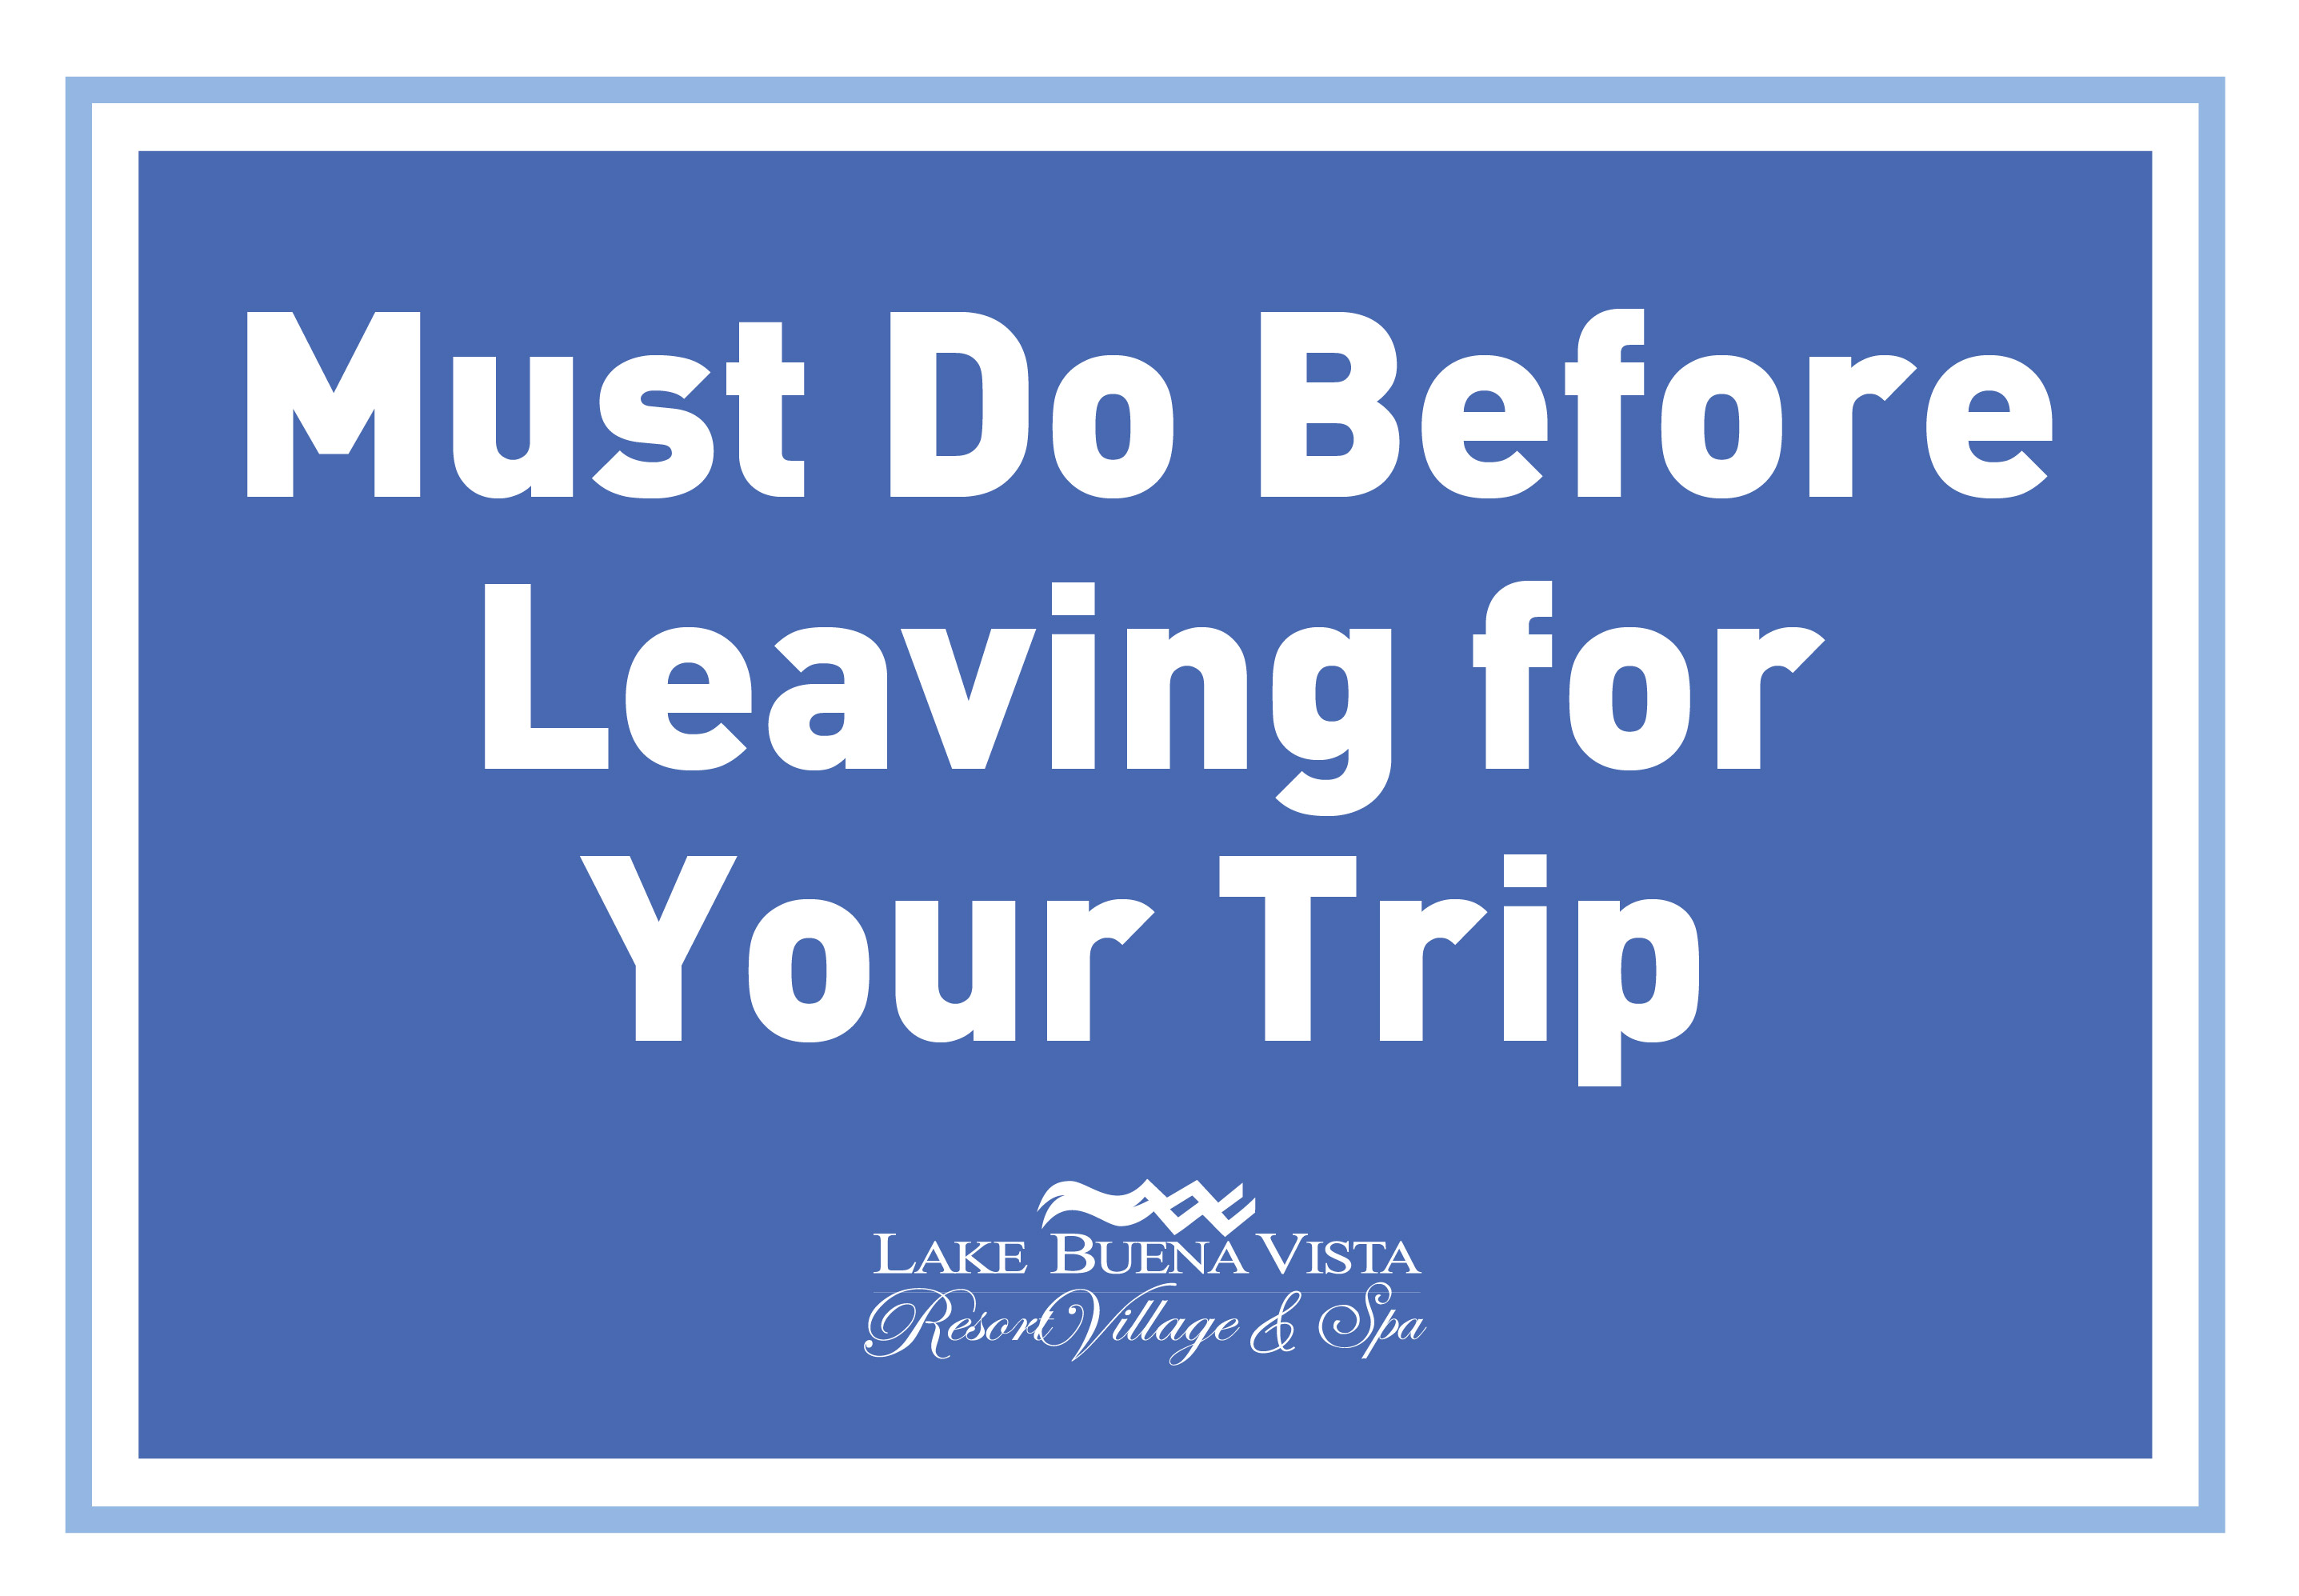 Lake Buena Vista Resort Village & Spa - Must Do Leave2